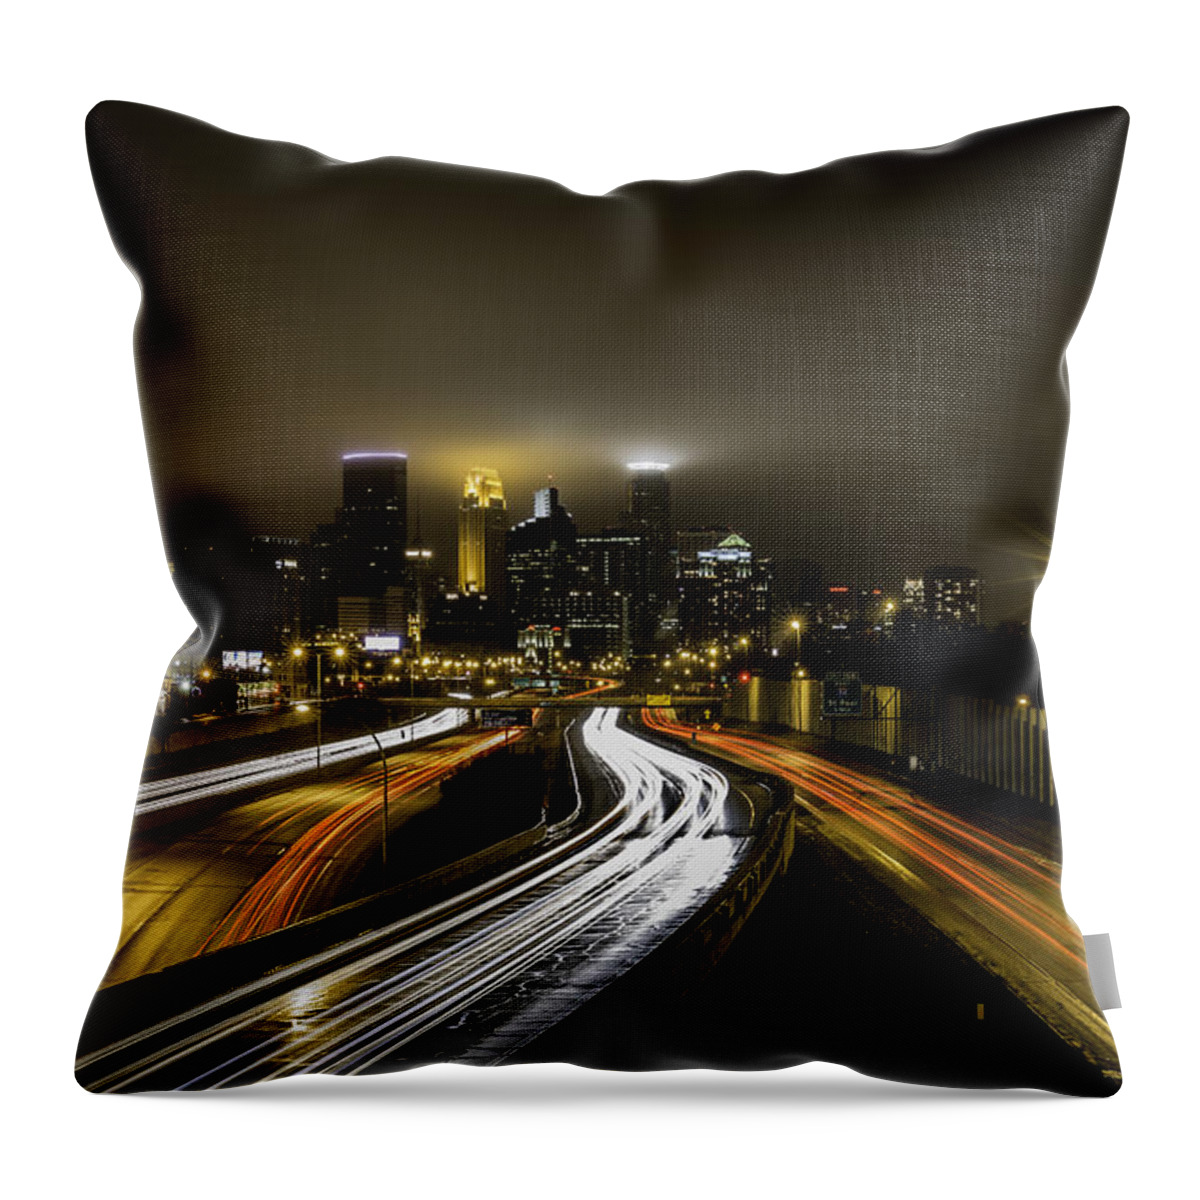 Minneapolis Throw Pillow featuring the photograph Minneapolis Skyline by The Flying Photographer